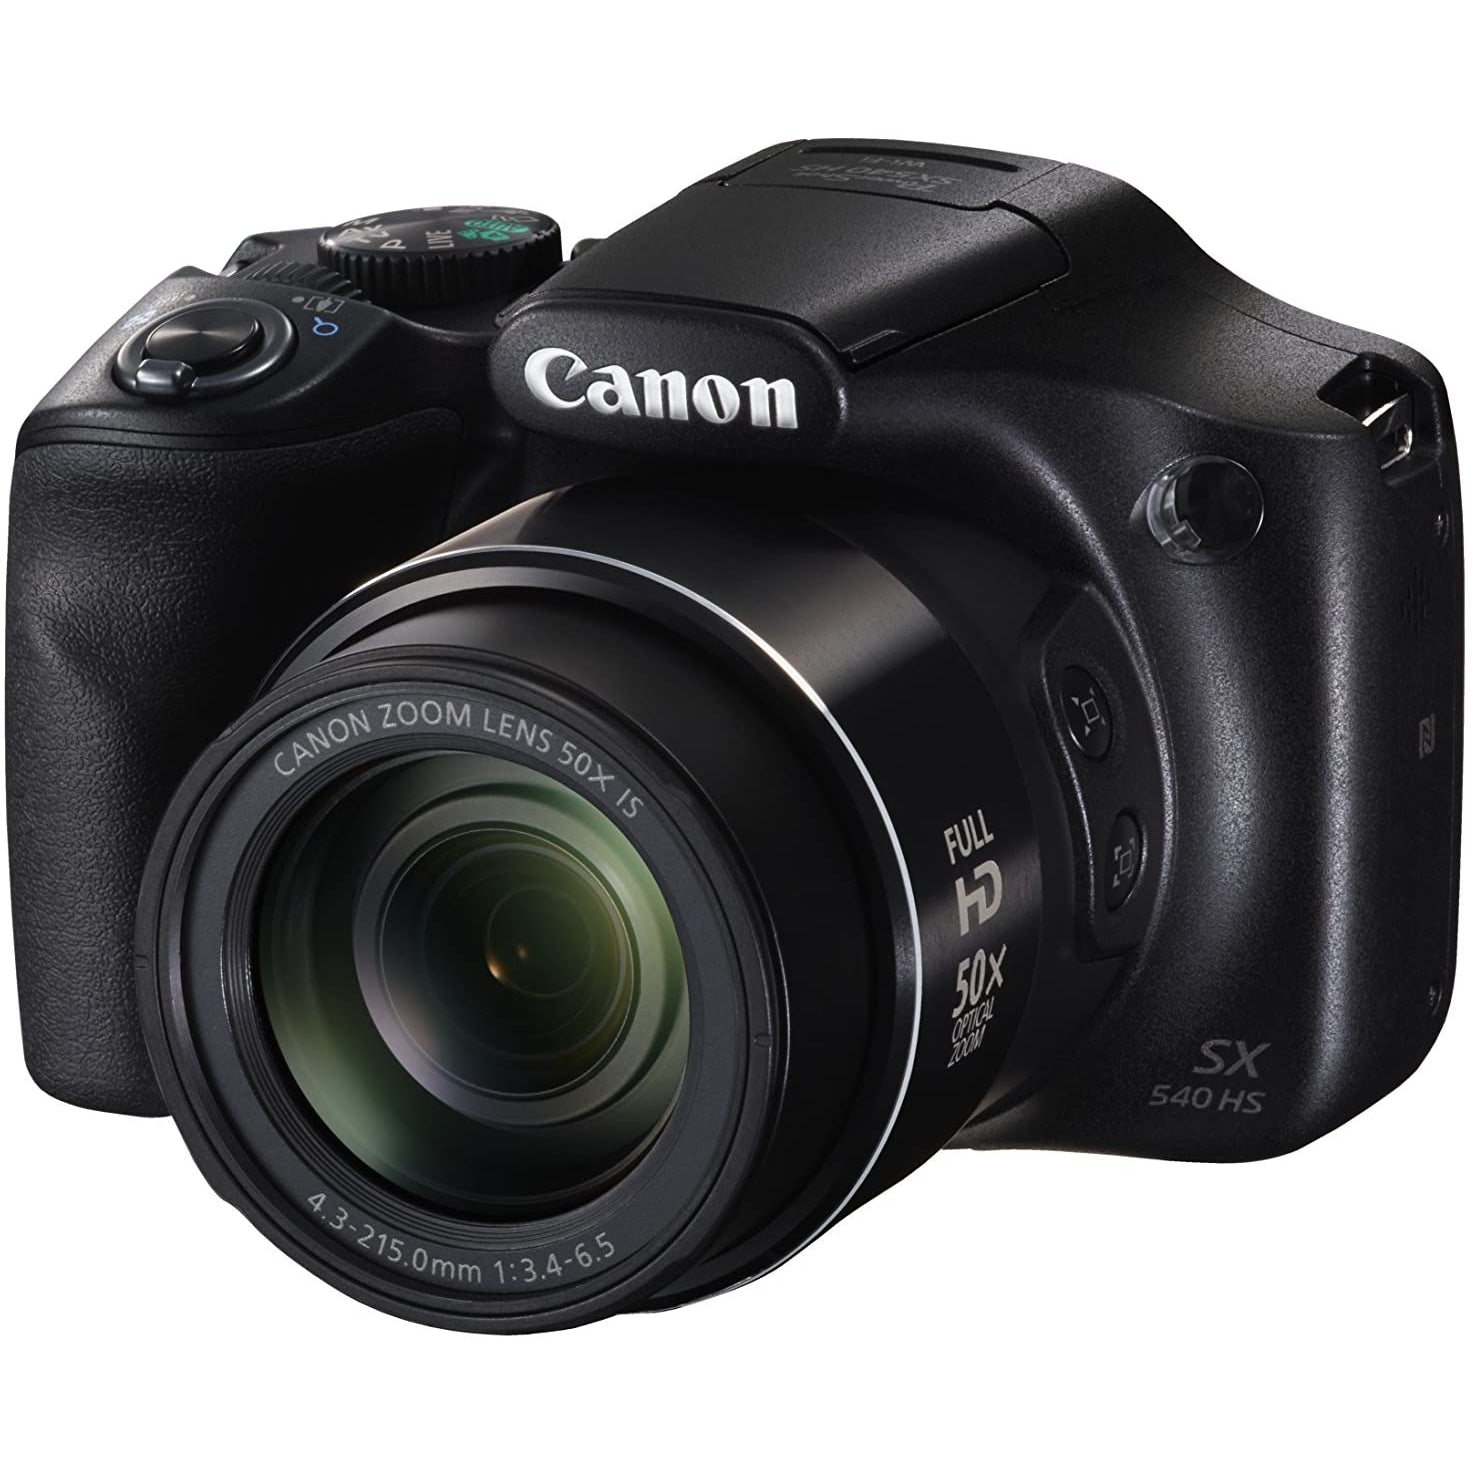 Canon PowerShot SX540 HS Bridge Camera, HD 1080p, Wi-Fi, NFC, 20.3MP, 50x, Black - Refurbished Excellent